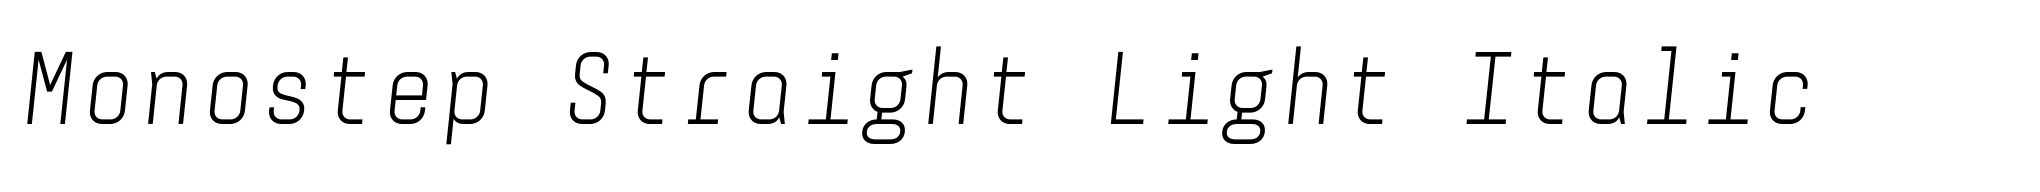 Monostep Straight Light Italic image